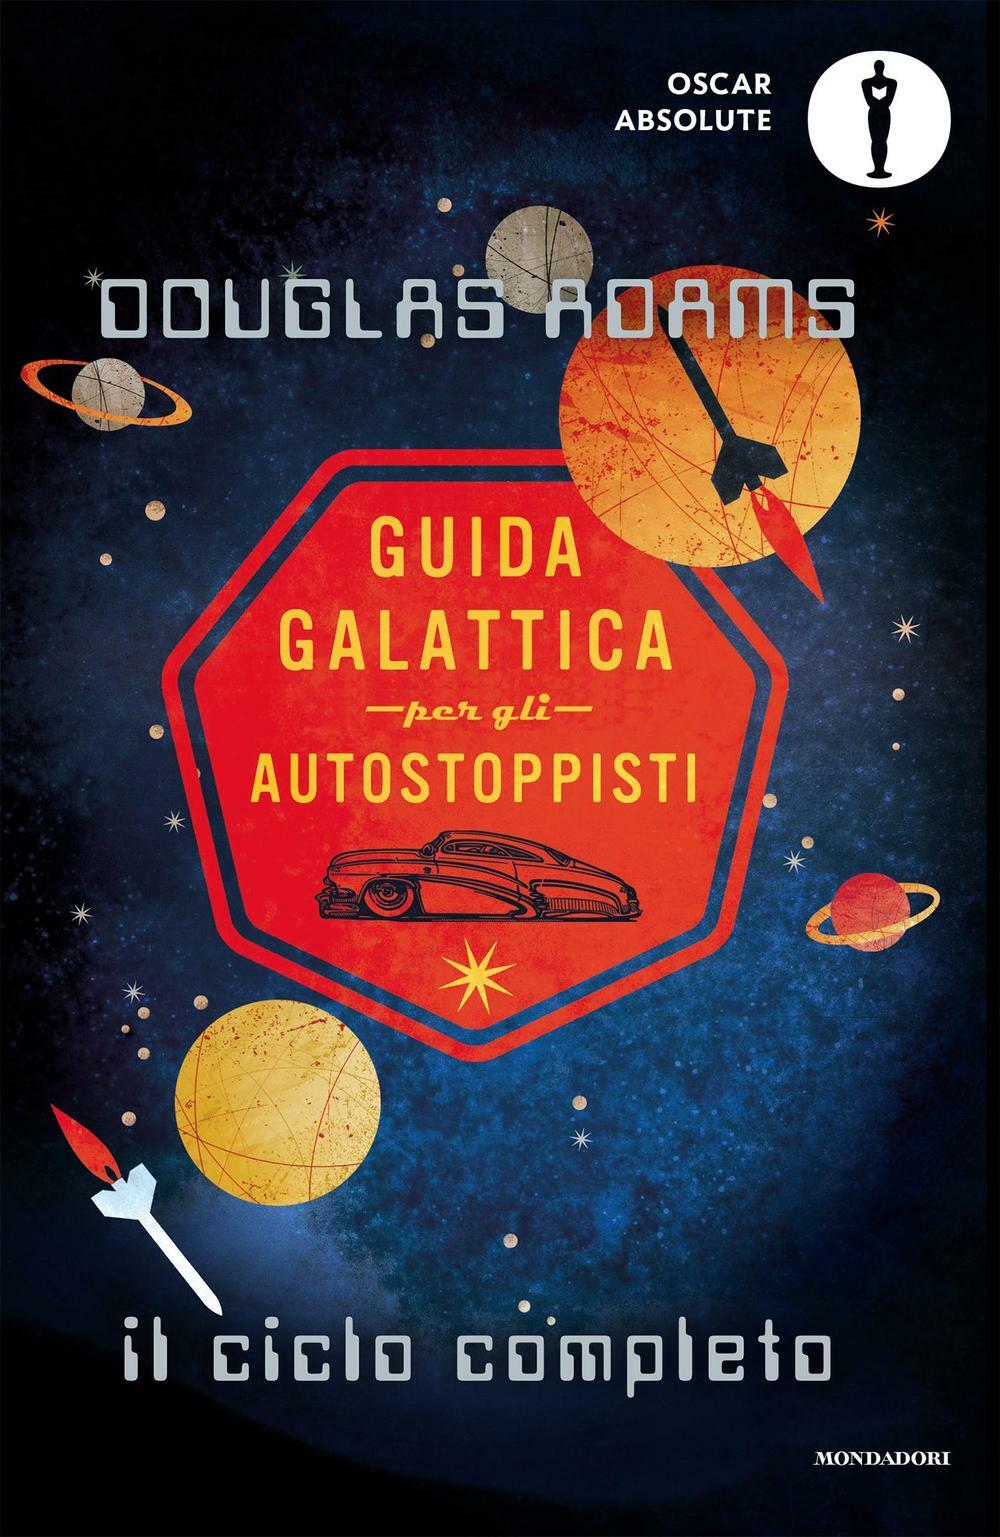 Douglas Adams: Guida galattica per gli autostoppisti (Italian language, 1999, Oscar Mondadori)